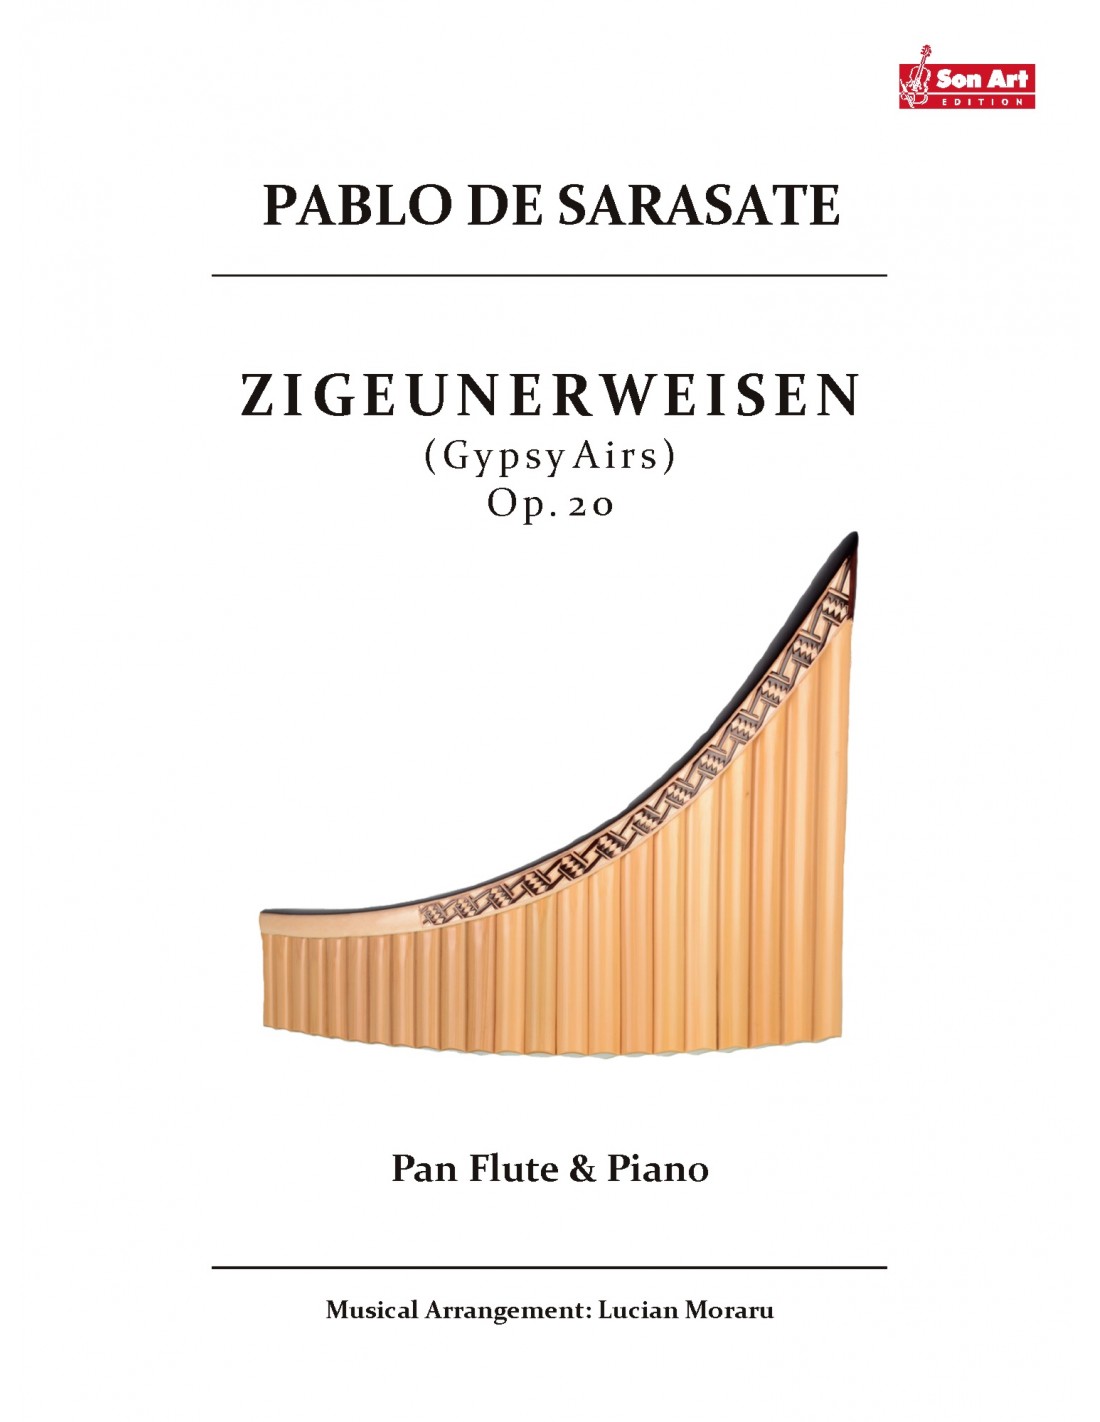 Zigeunerweisen - Pablo de Sarasate - Nai si Pian